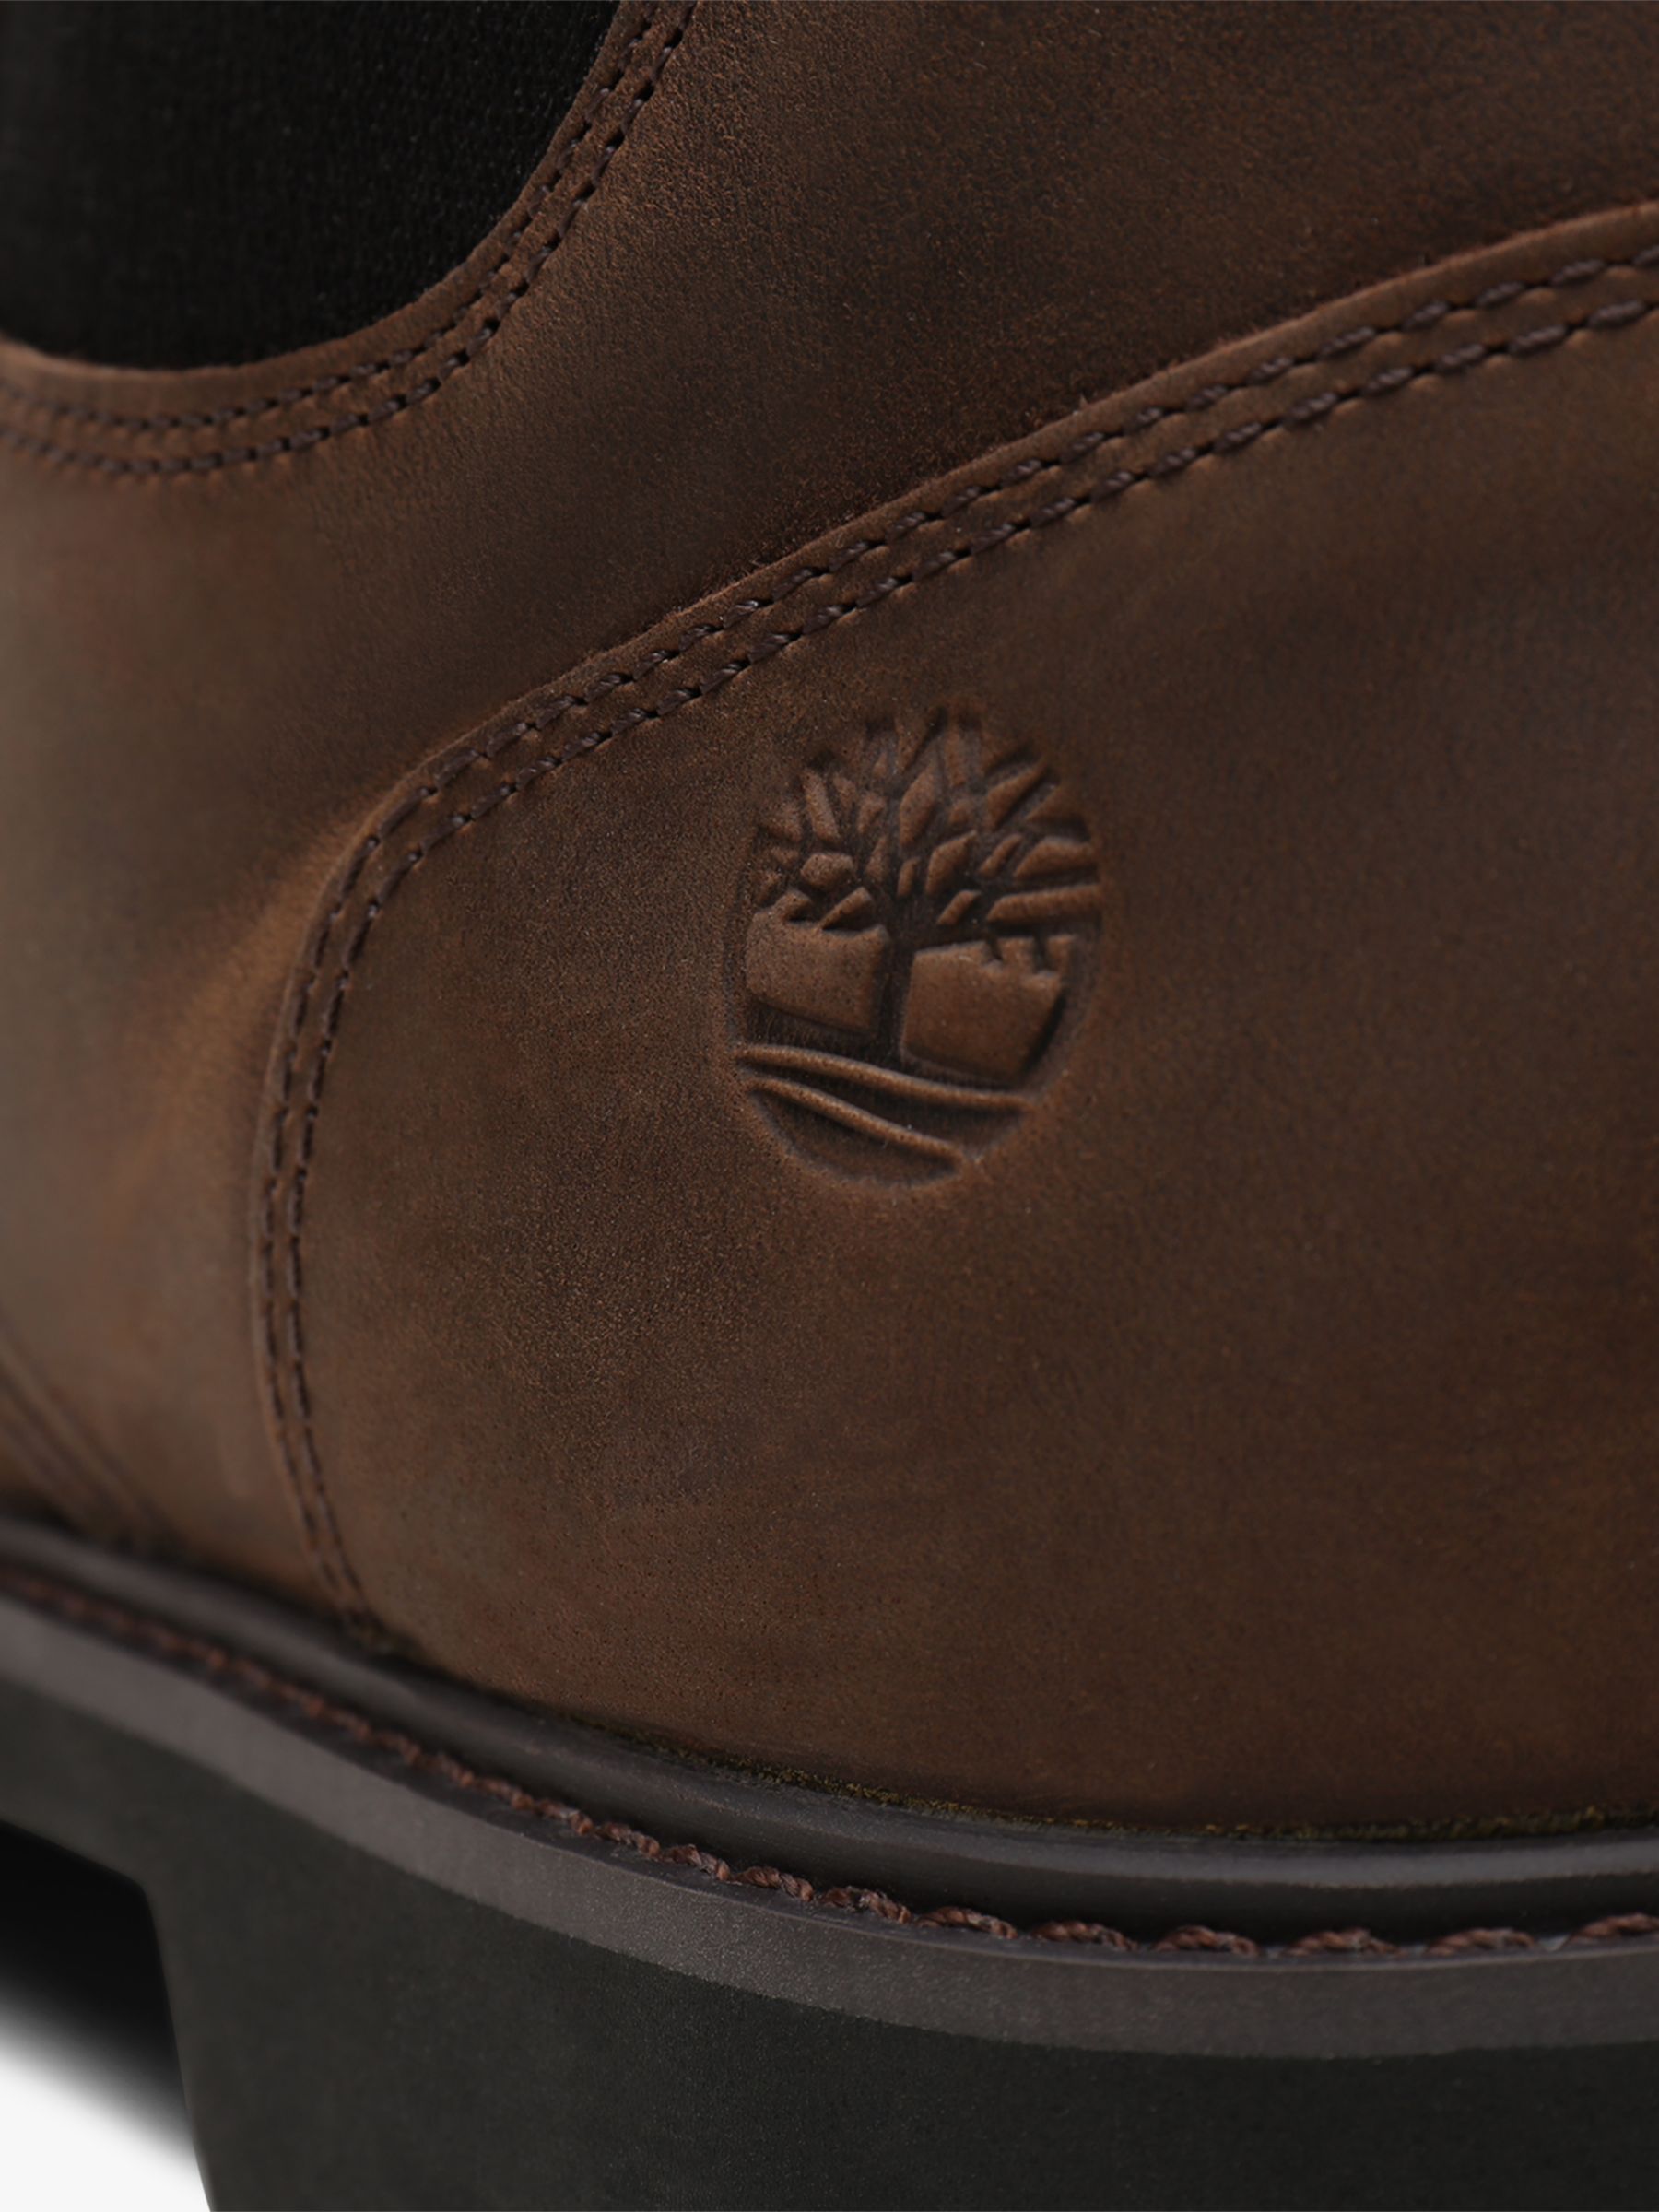 Timberland Stormbucks Waterproof Leather Chelsea Boots, Brown, 7